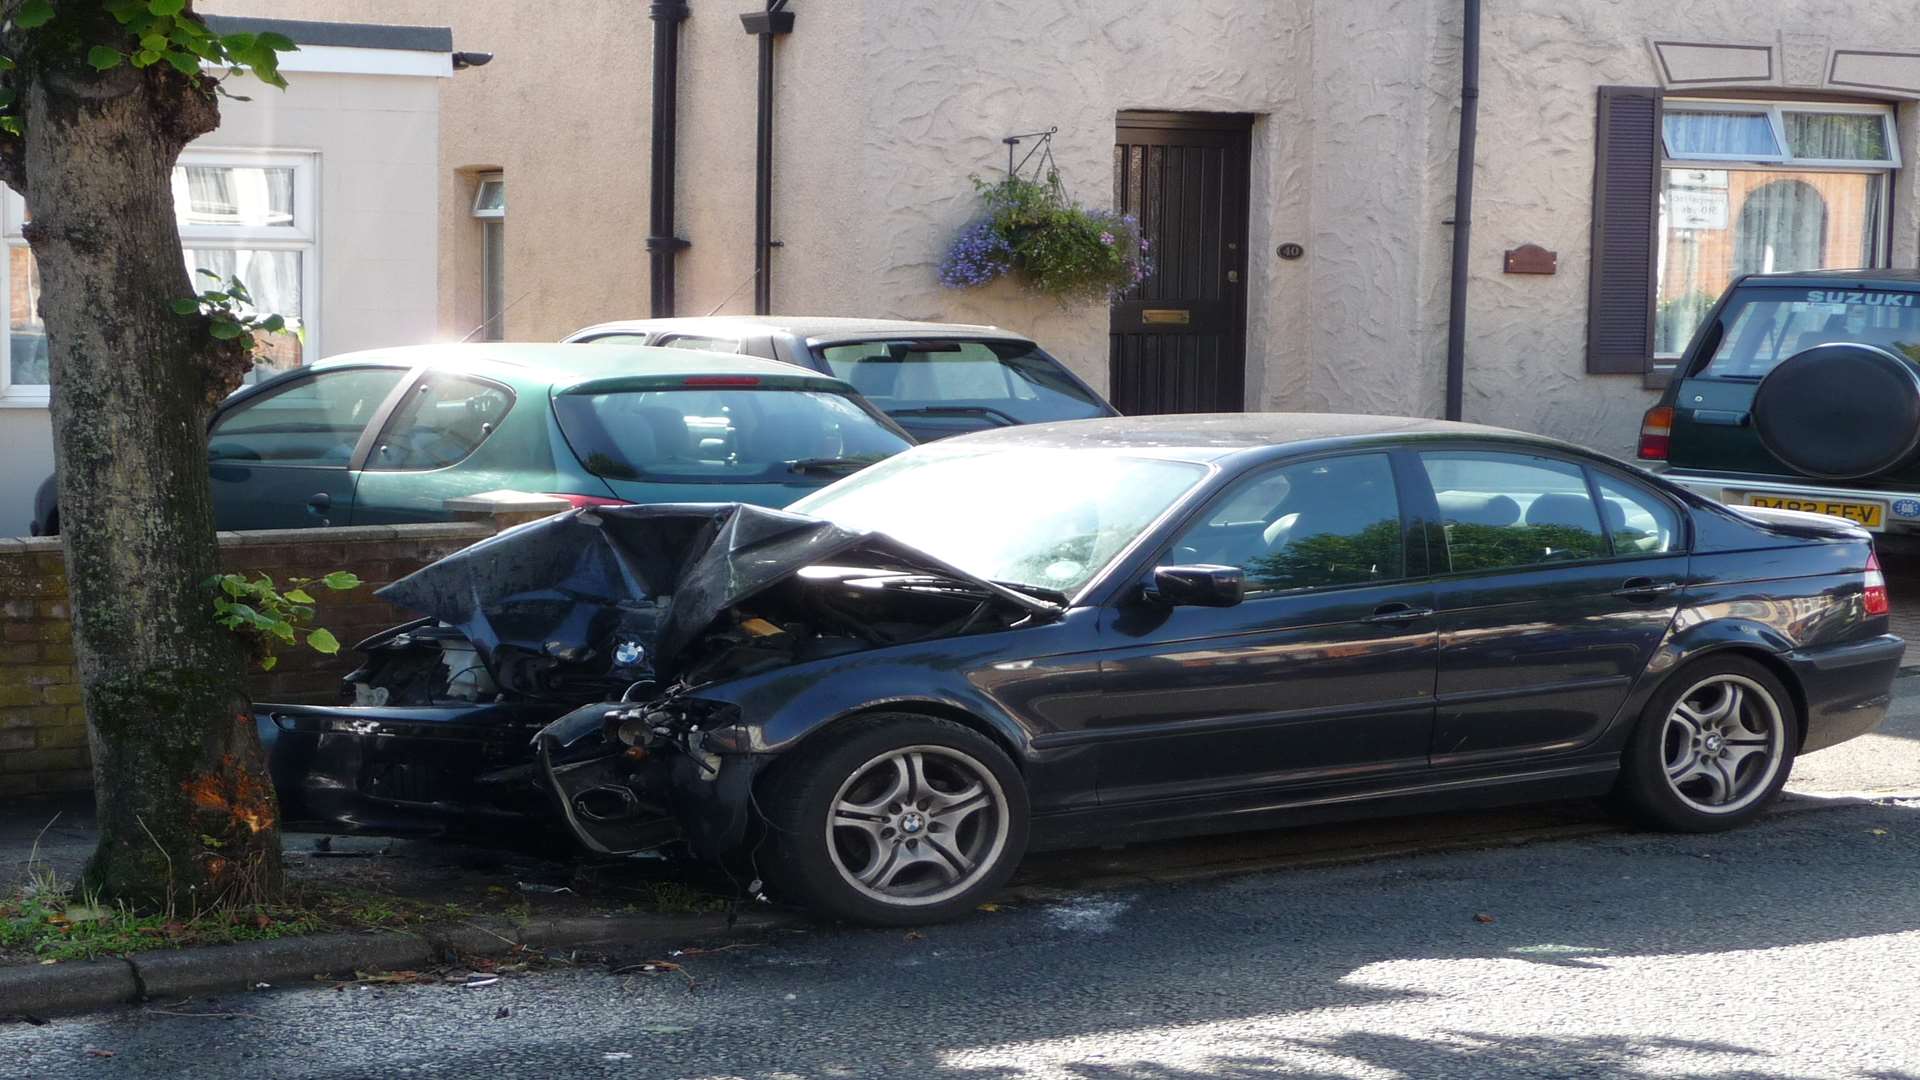 The crash scene at Twydall Lane this morning